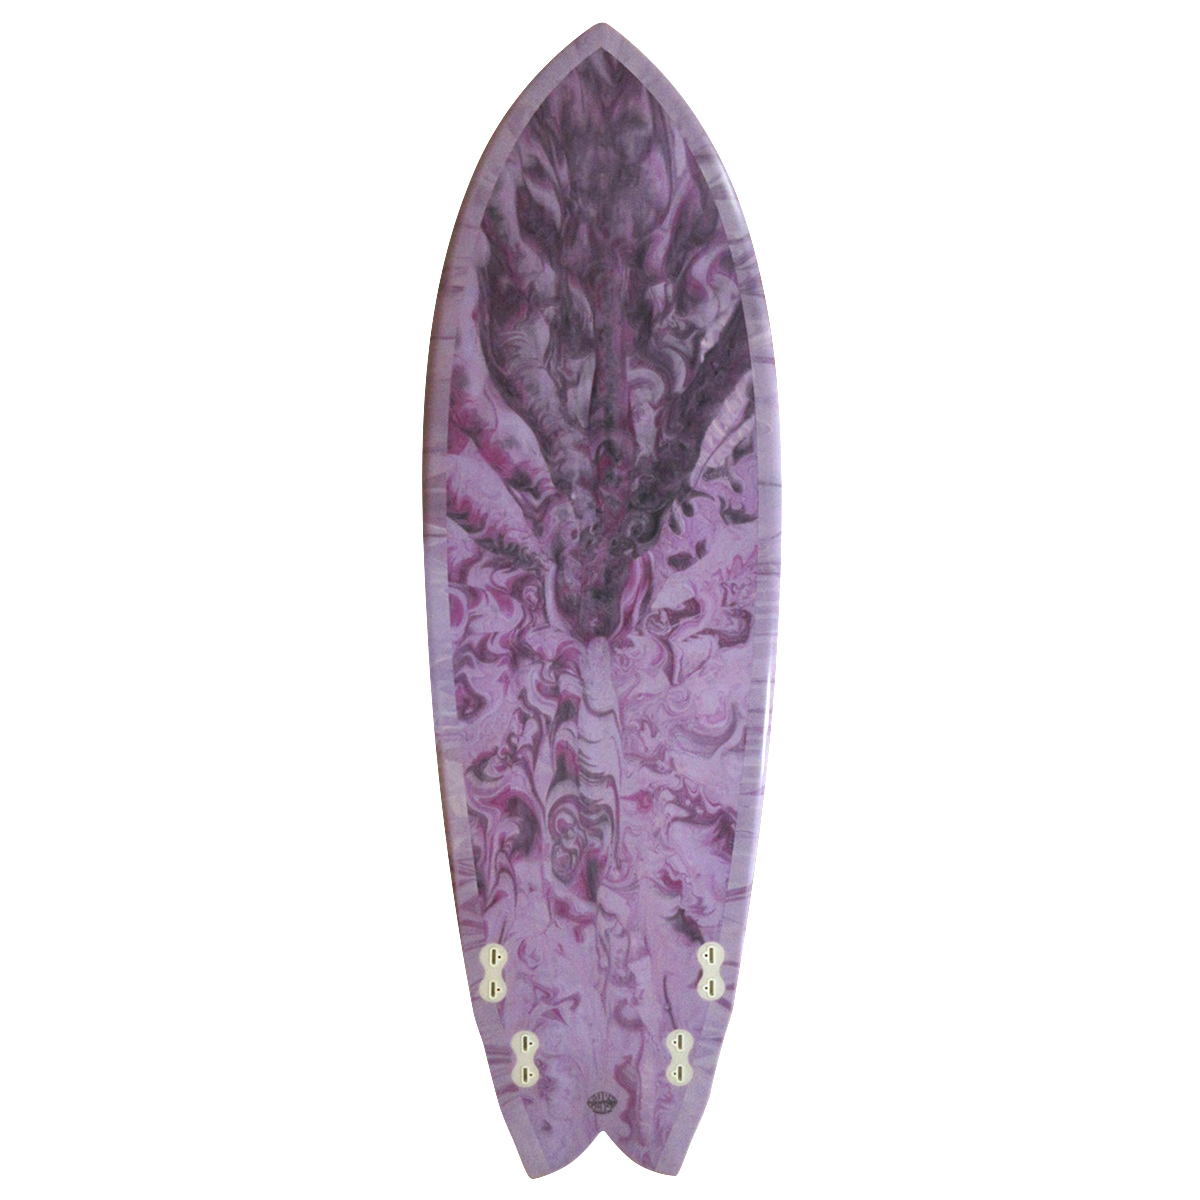 EC Surfboards / FANTOM OF THE AGUA 5`11